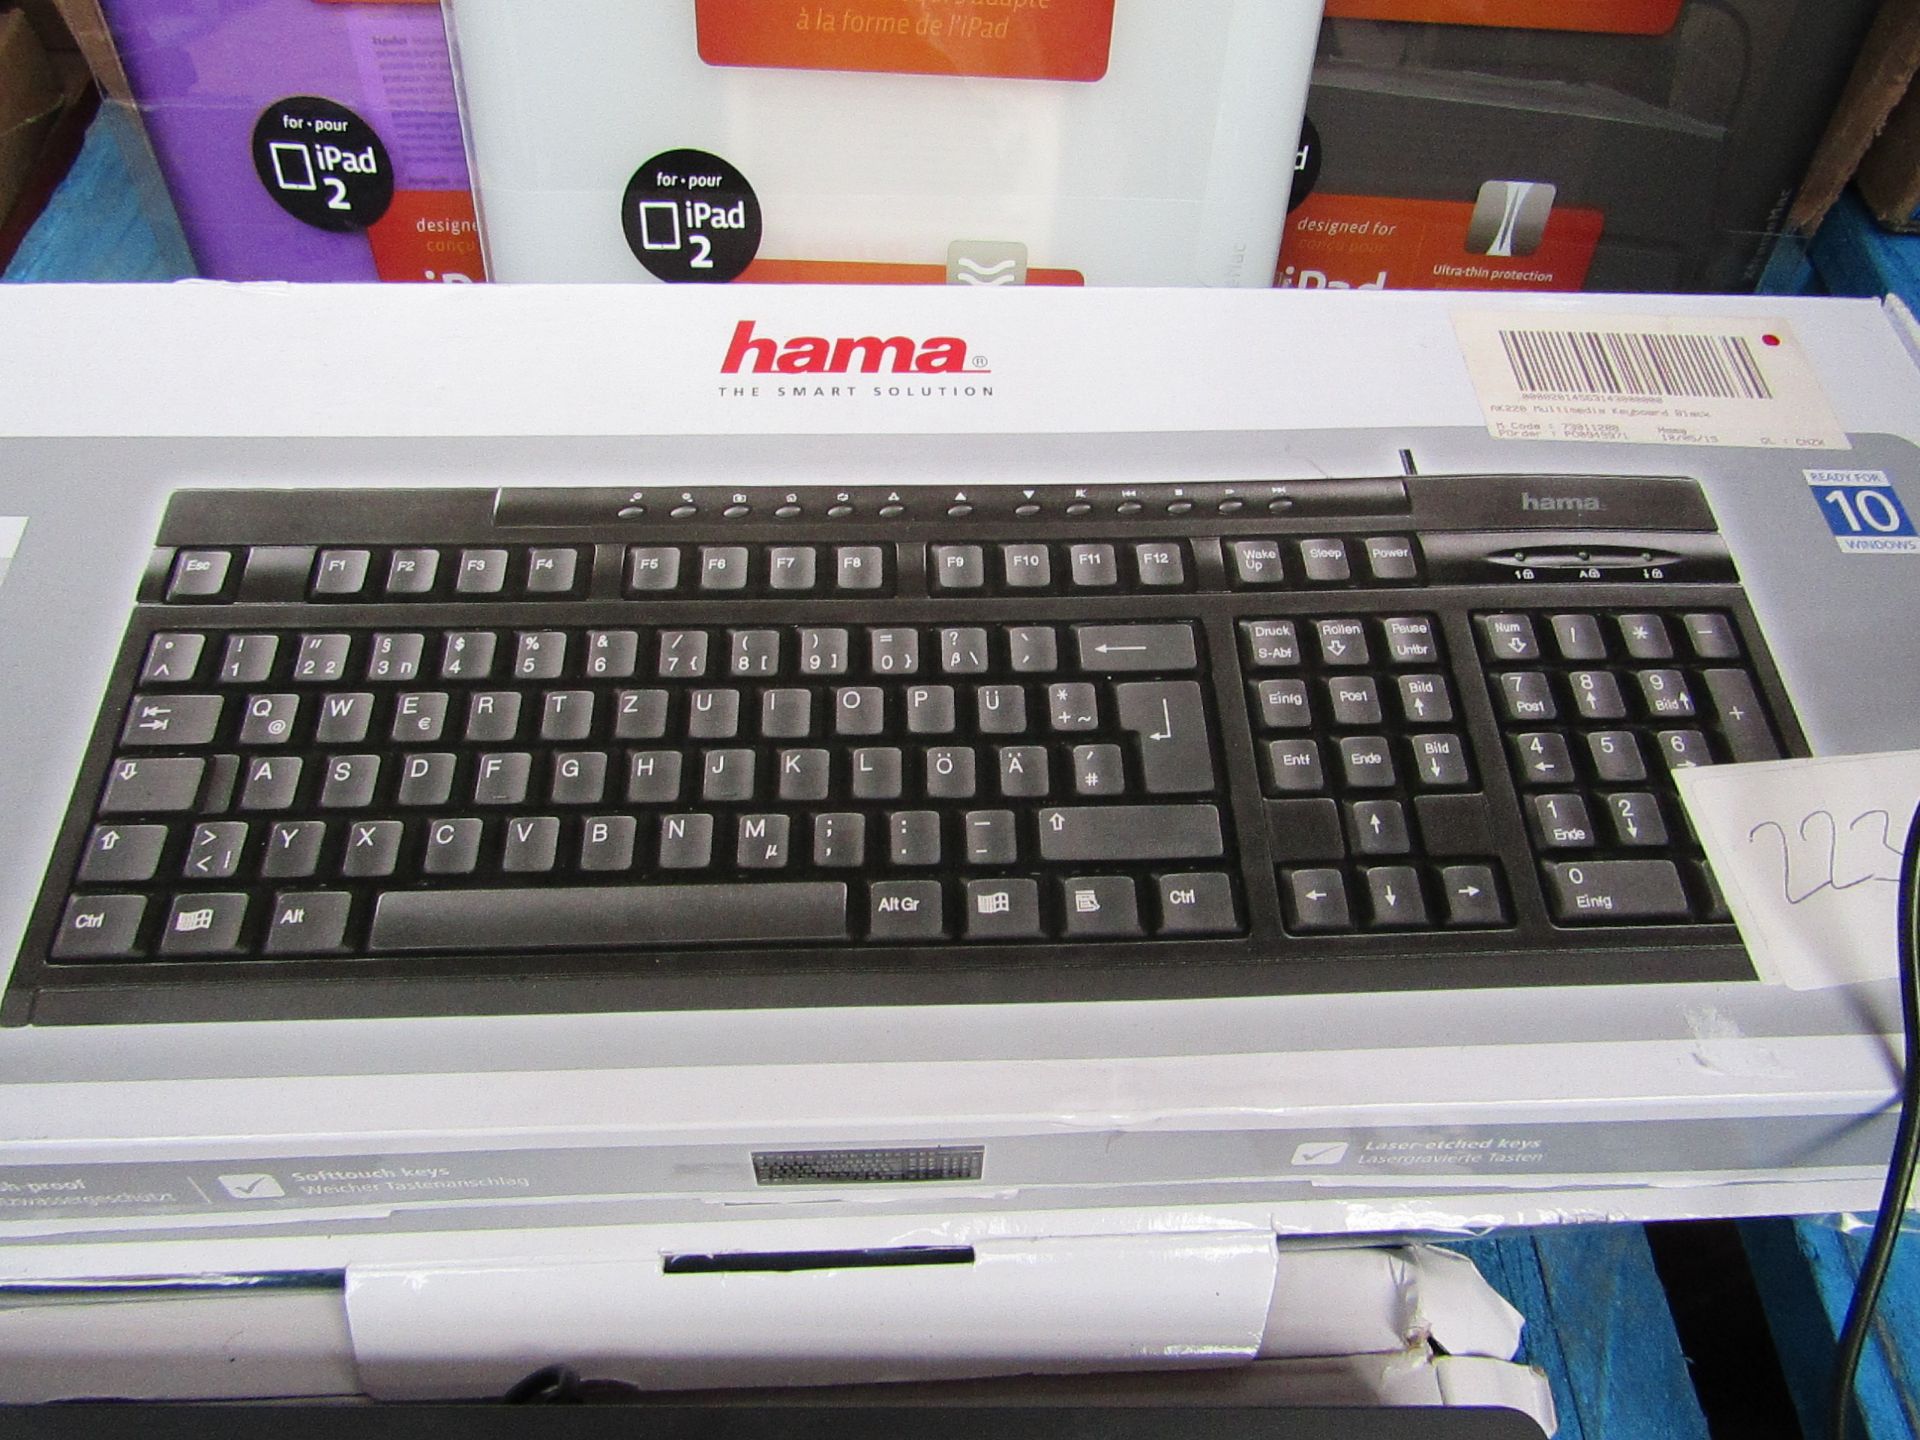 2x HAMA - AK 220 Multimedia Keyboard - Untested & Boxed.